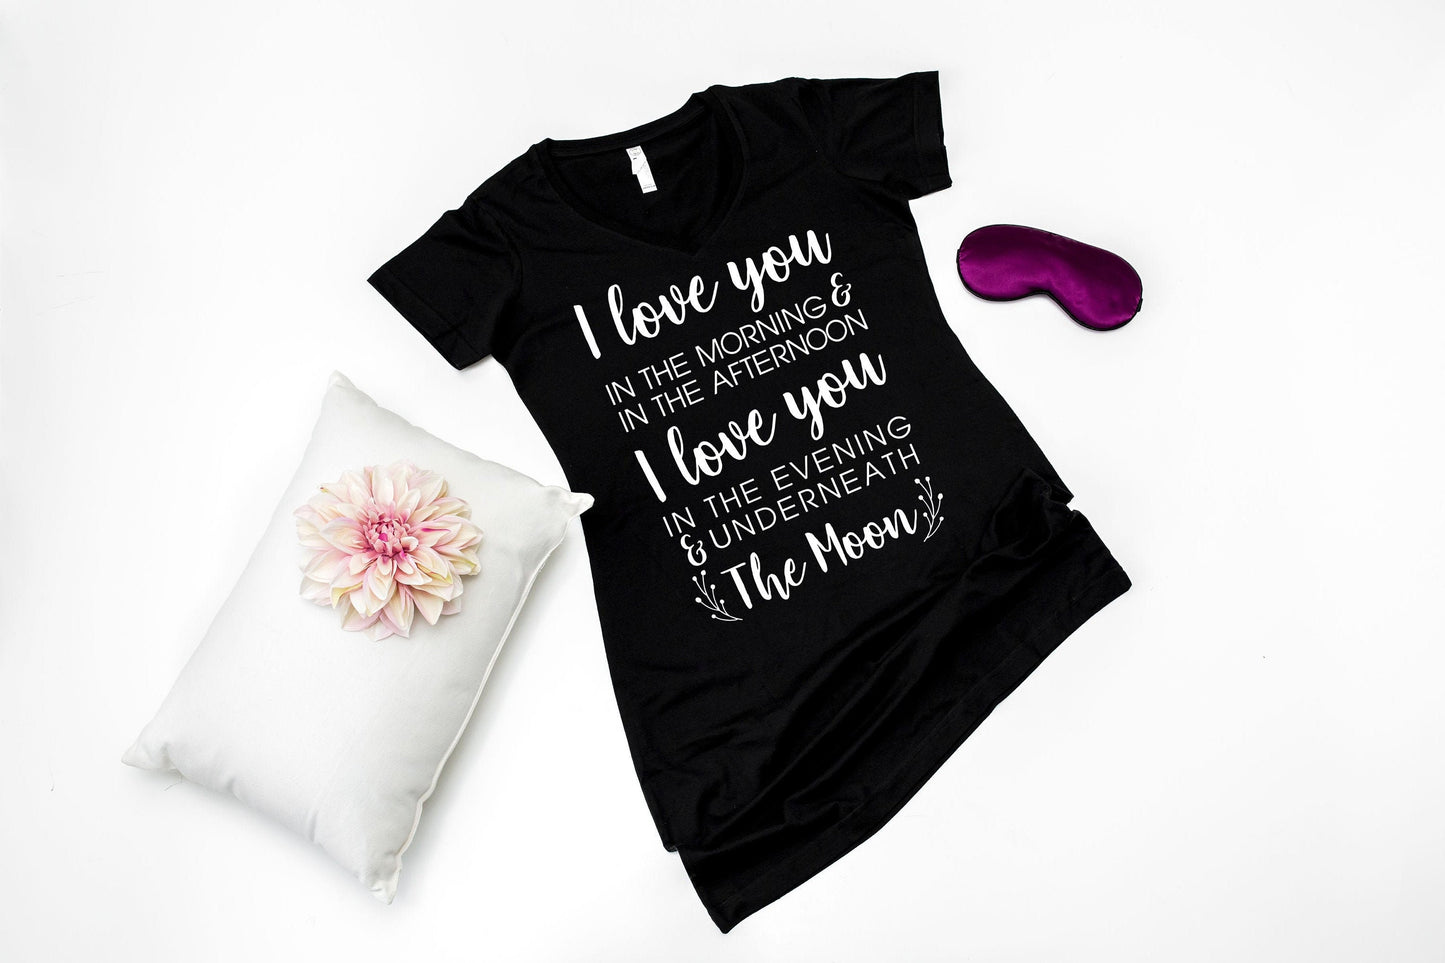 I Love You in The Morning V-neck Night Shirt - nighty - sleep shirt - long night shirt - women's pajamas - lounge shirt